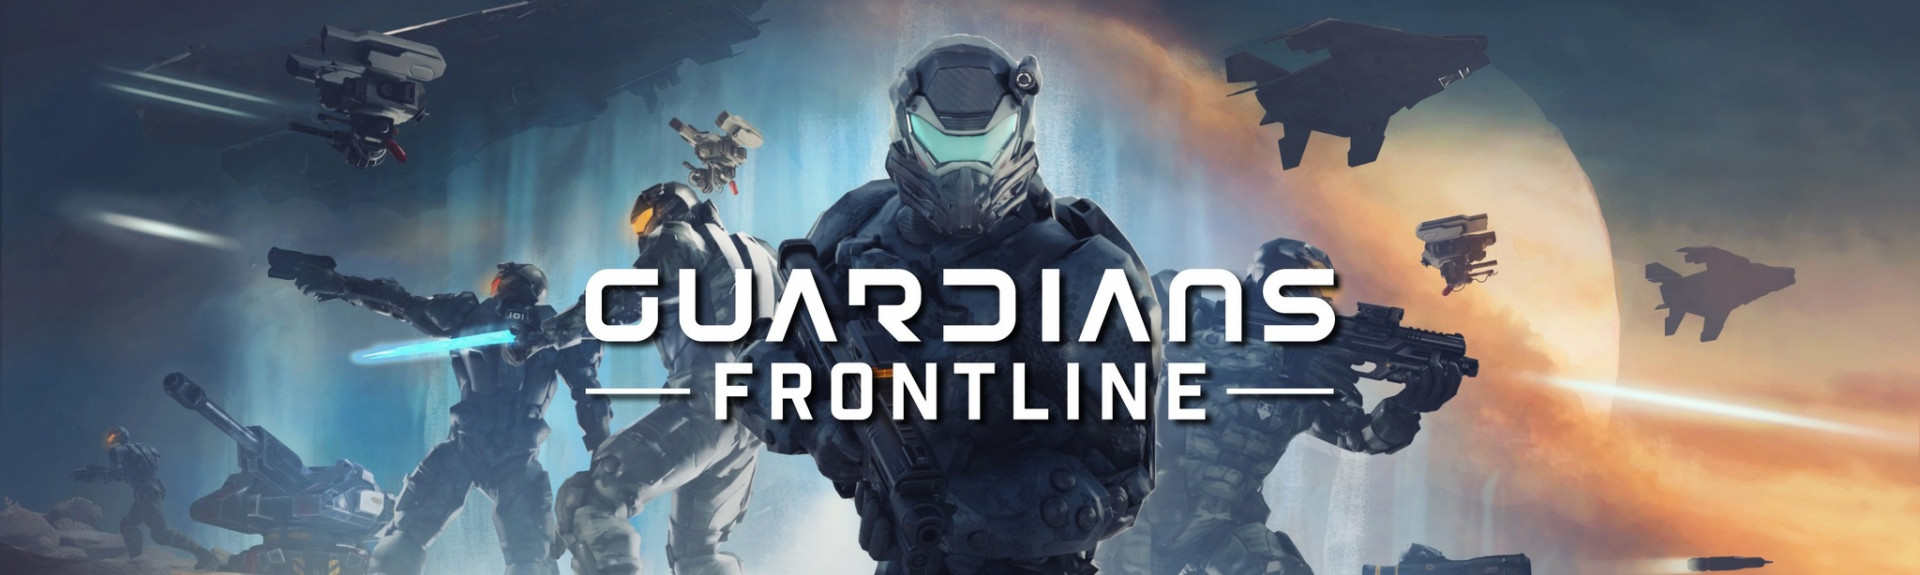 Guardians Frontline: ANÁLISIS